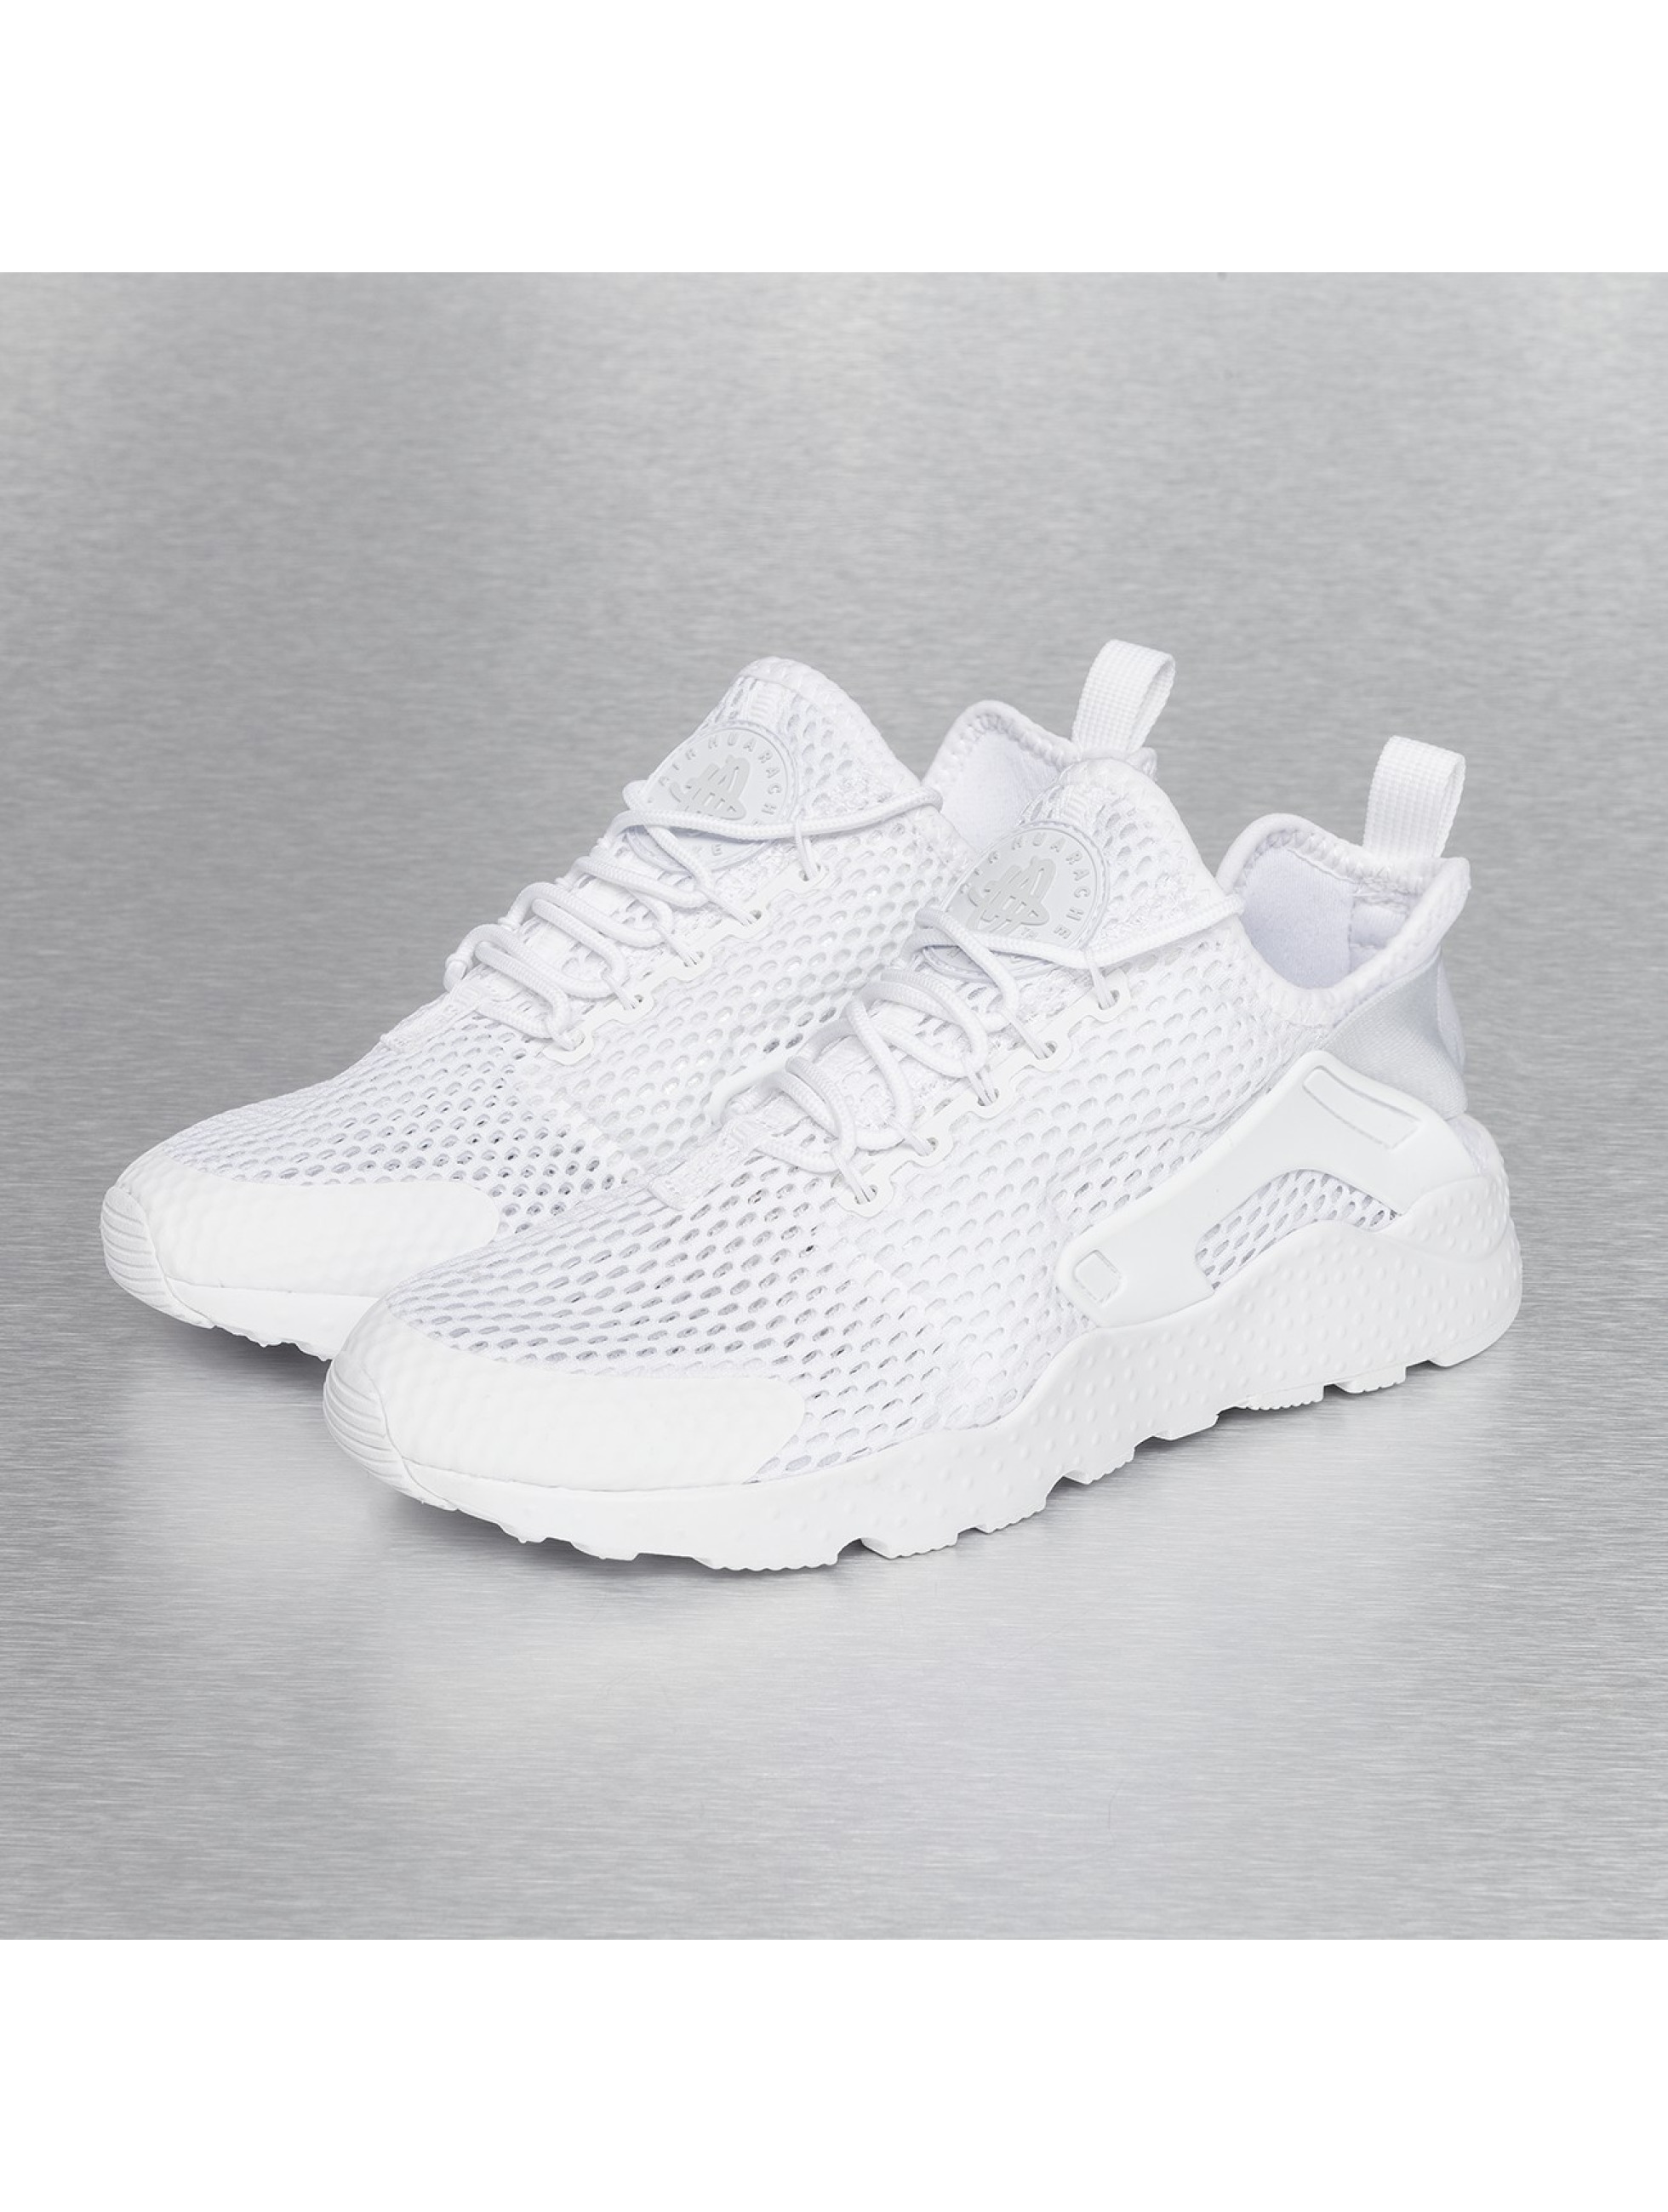 Schuhe / Sneaker Air Huarache Run Ultra BR in weiß